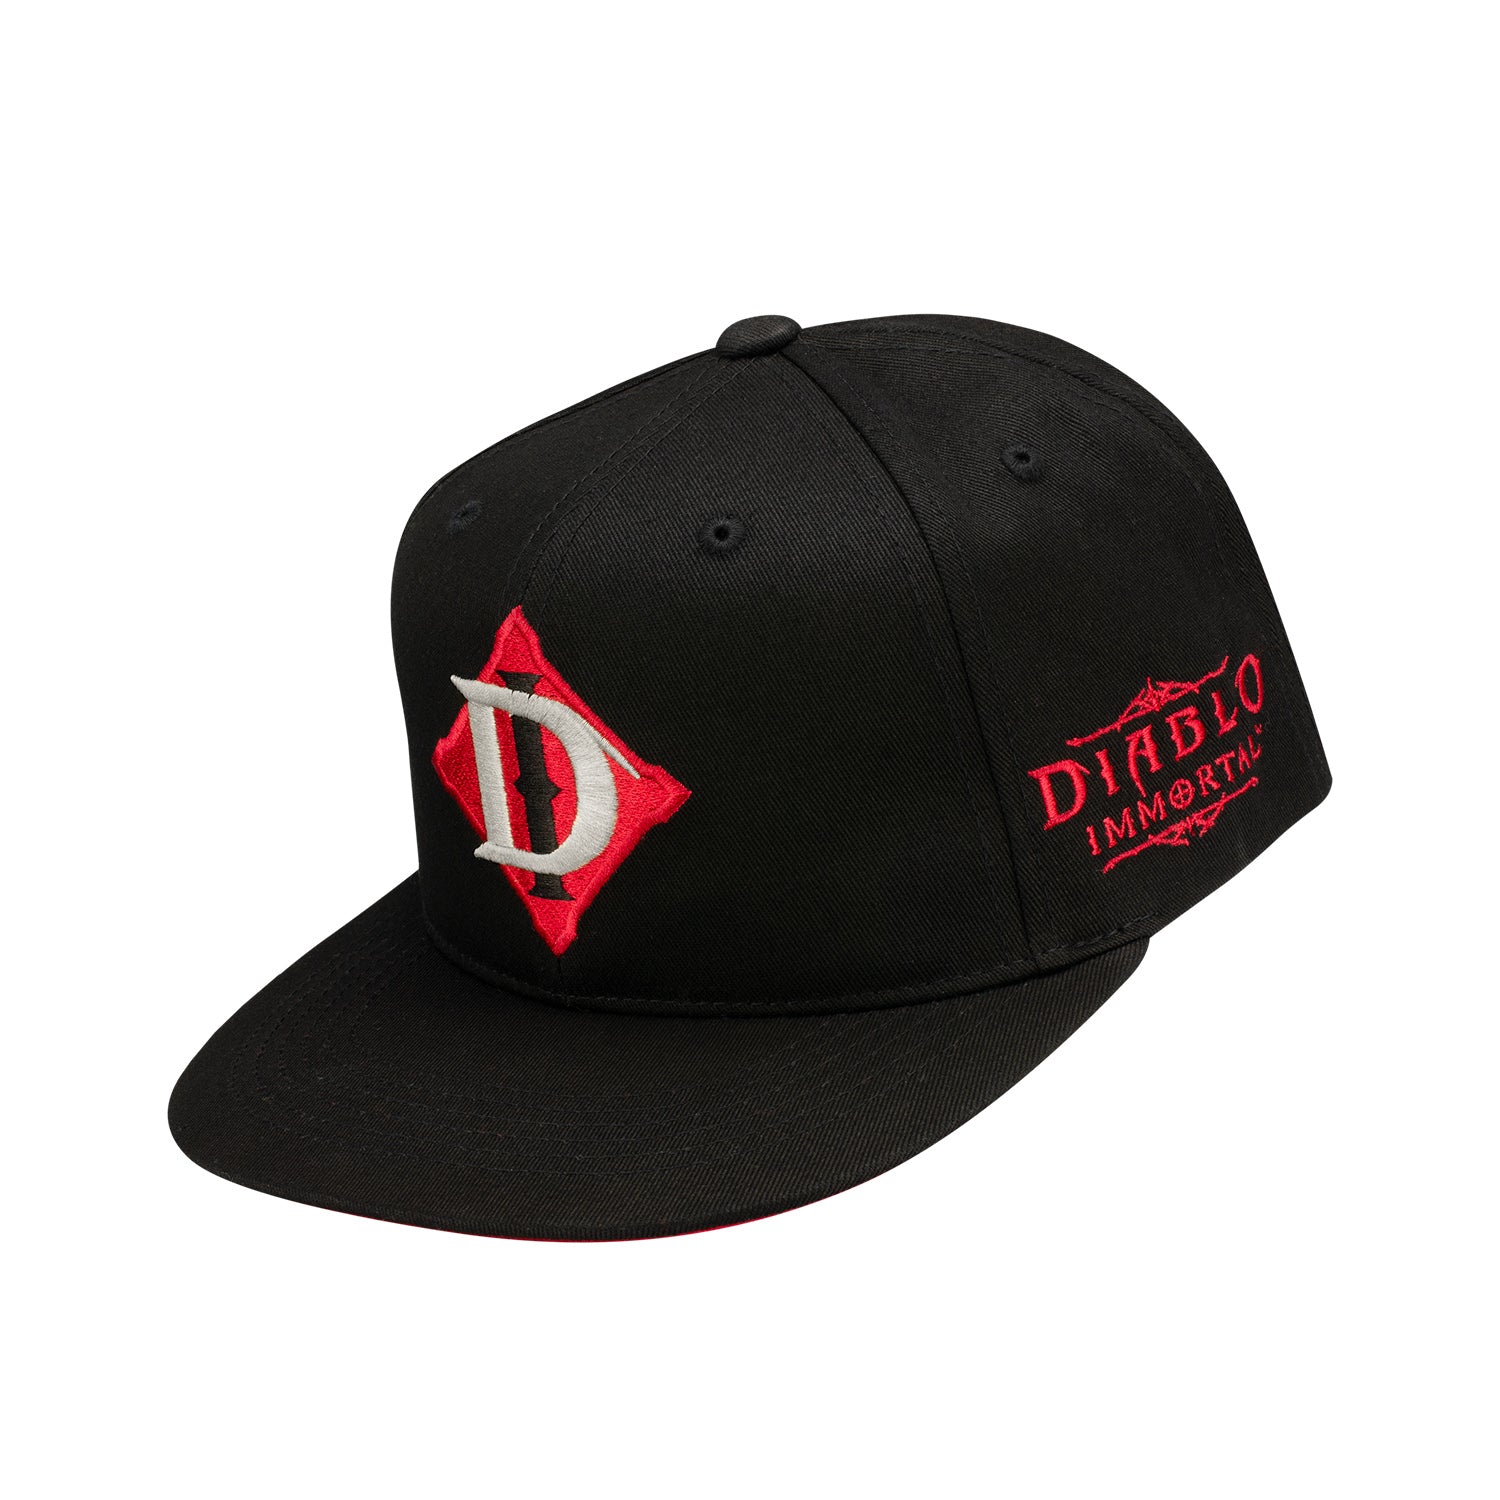 Diablo Immortal Black Flatbill Snapback Hat - Front Left Side View 